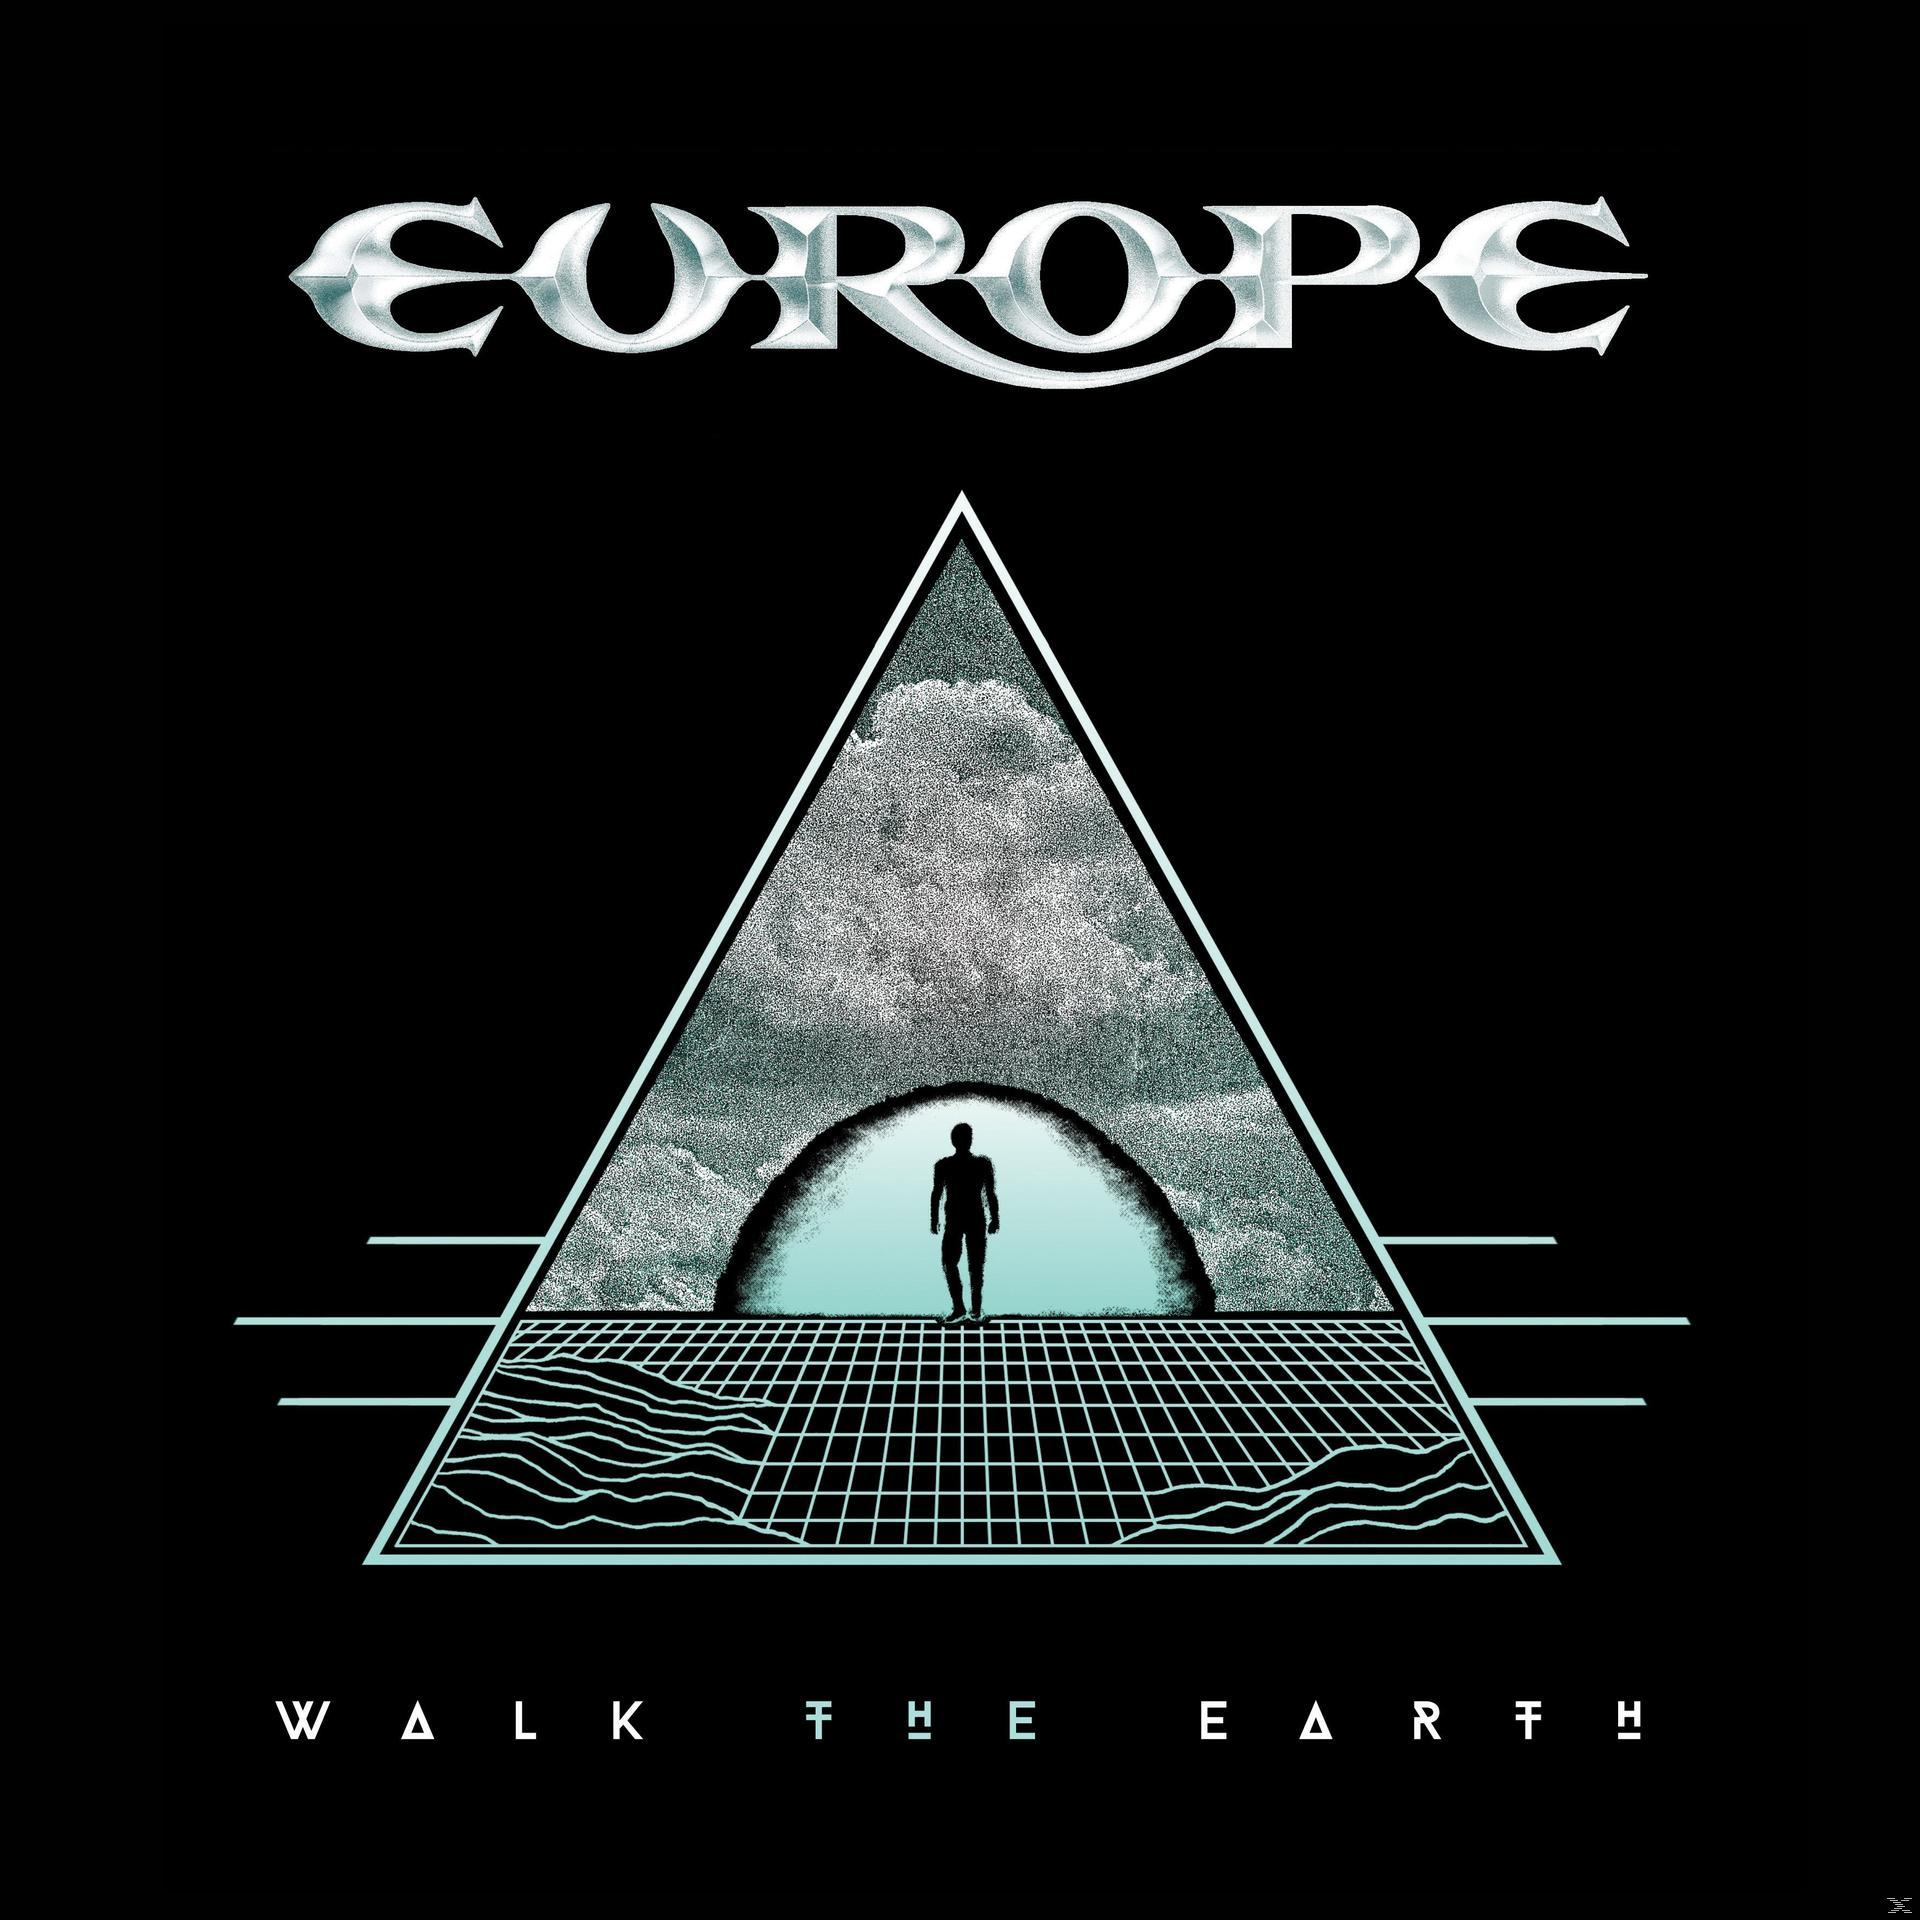 - Europe The Walk - Earth (Vinyl)